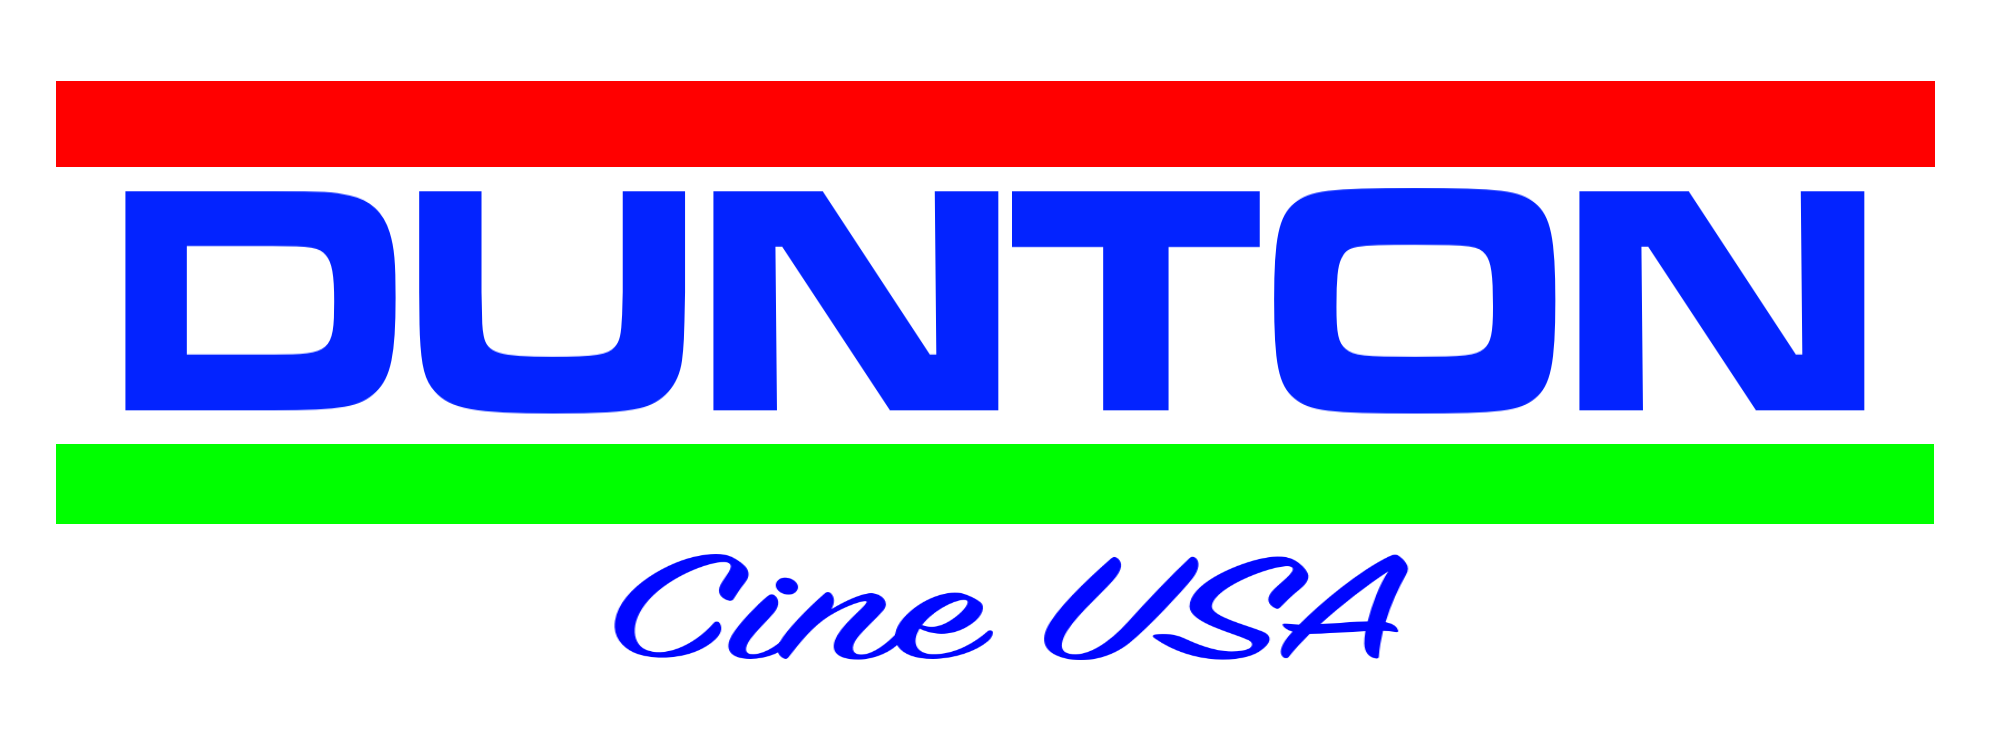 Dunton Cine USA